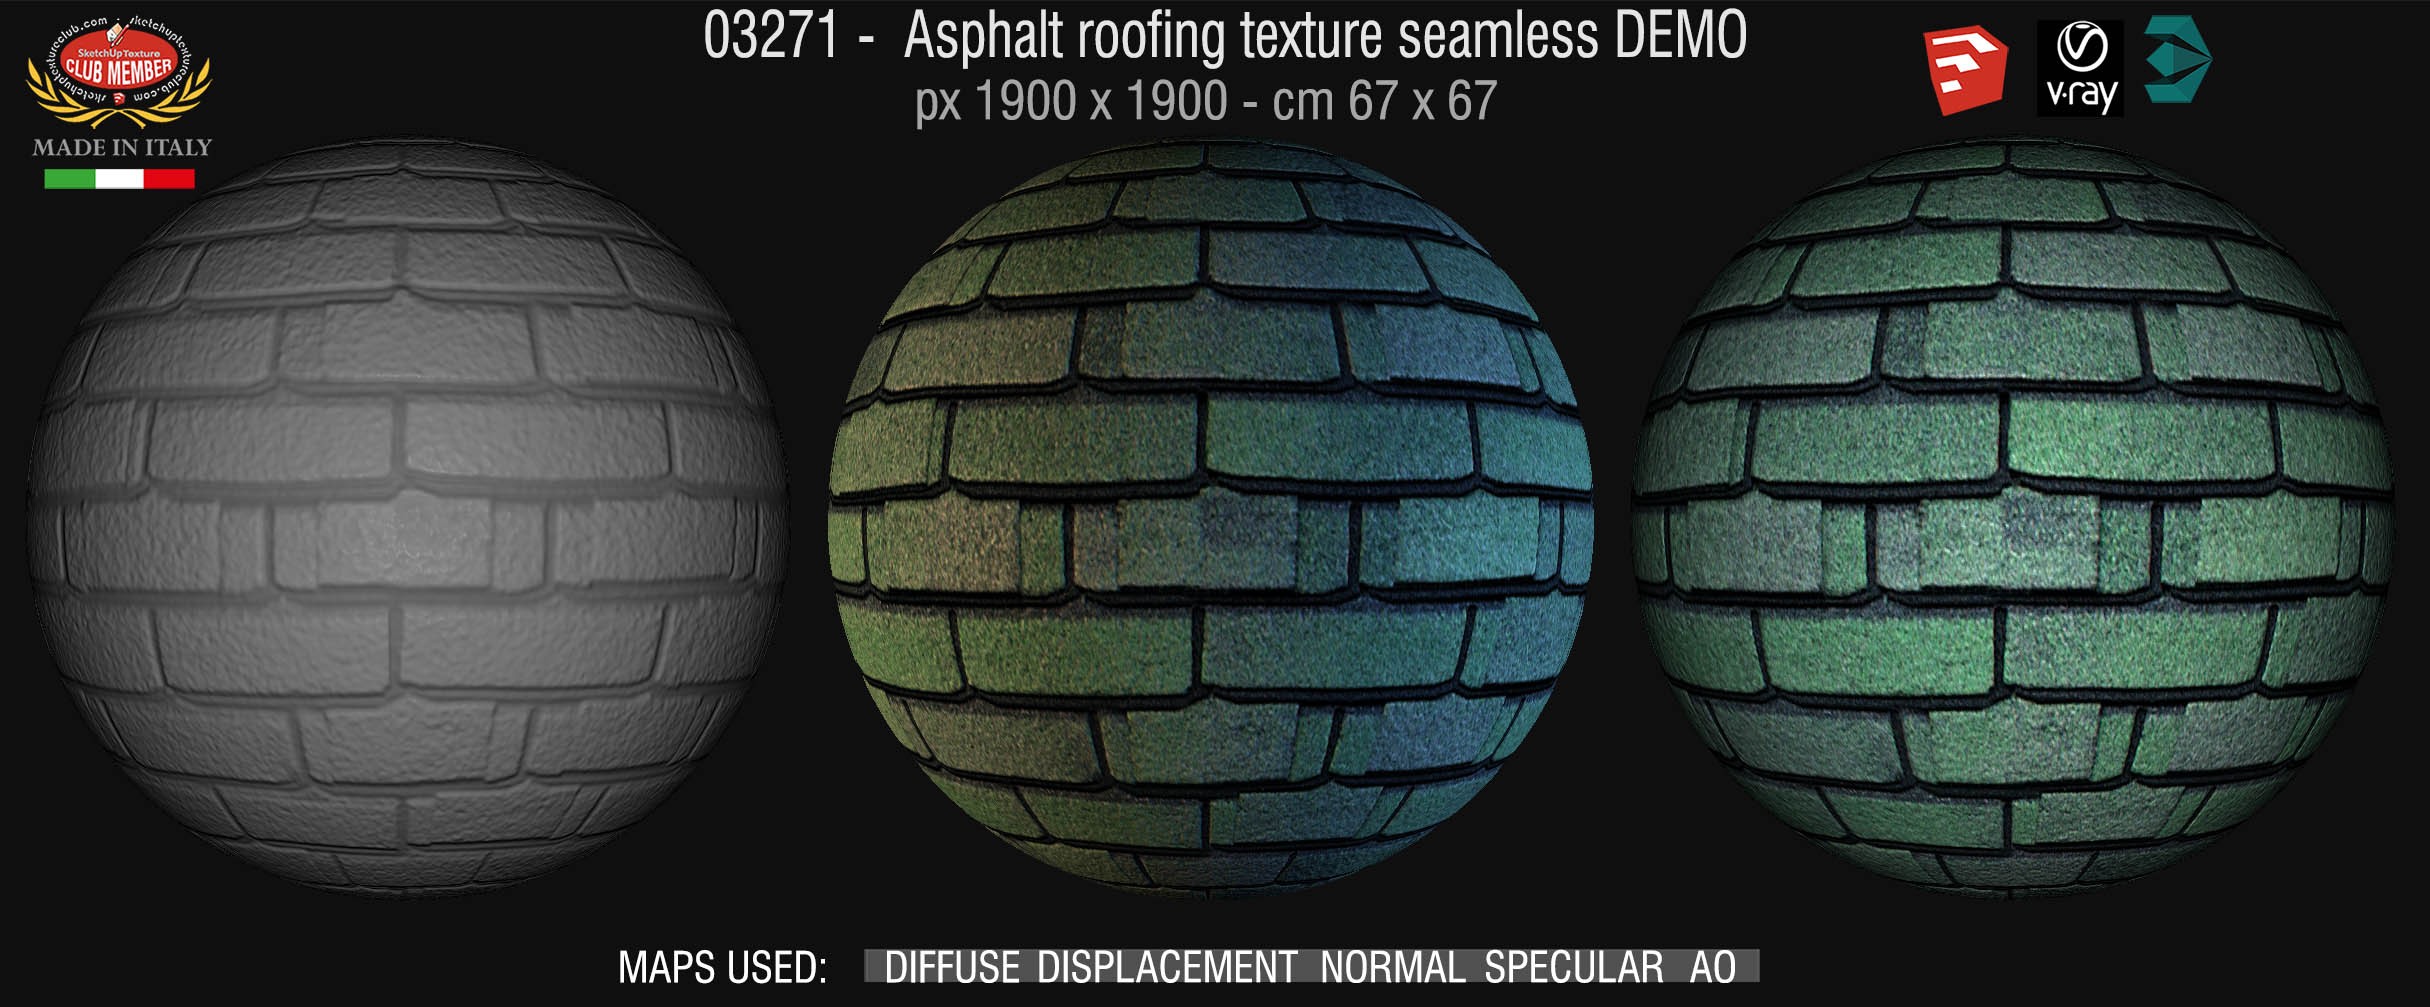 03271 Asphalt roofing texture + maps DEMO